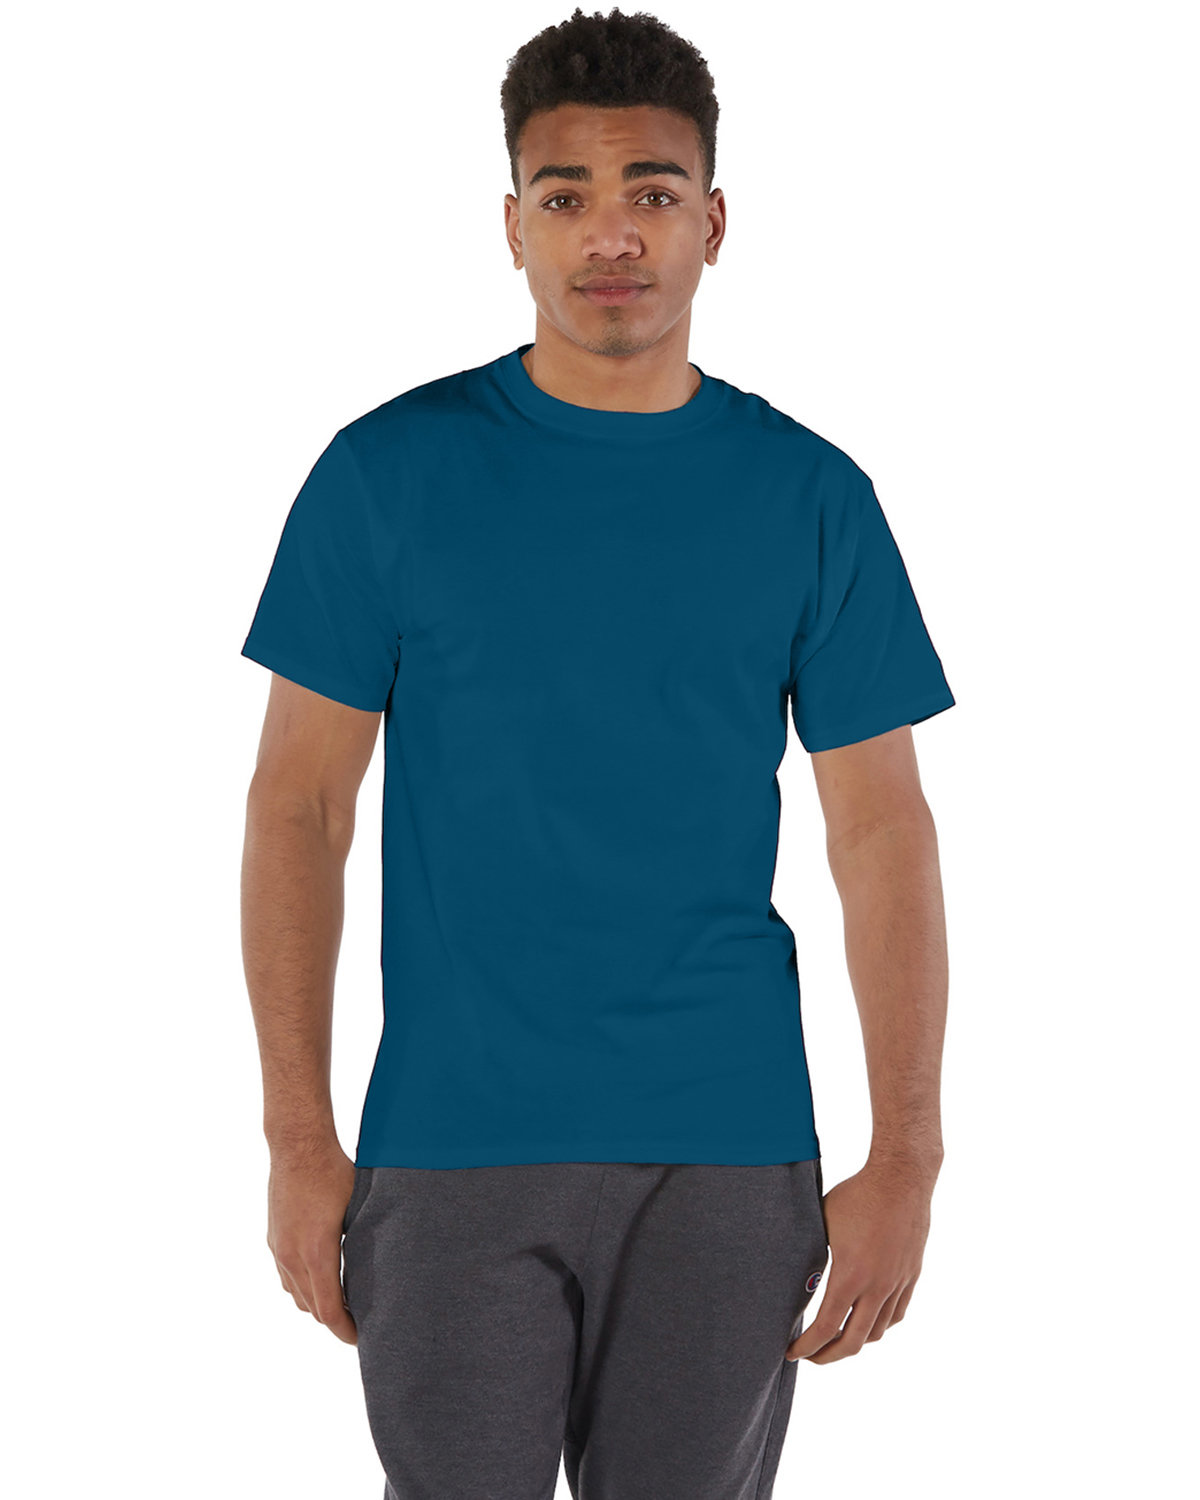 Champion Adult 6 oz. Short-Sleeve T-Shirt LATE NIGHT BLUE 